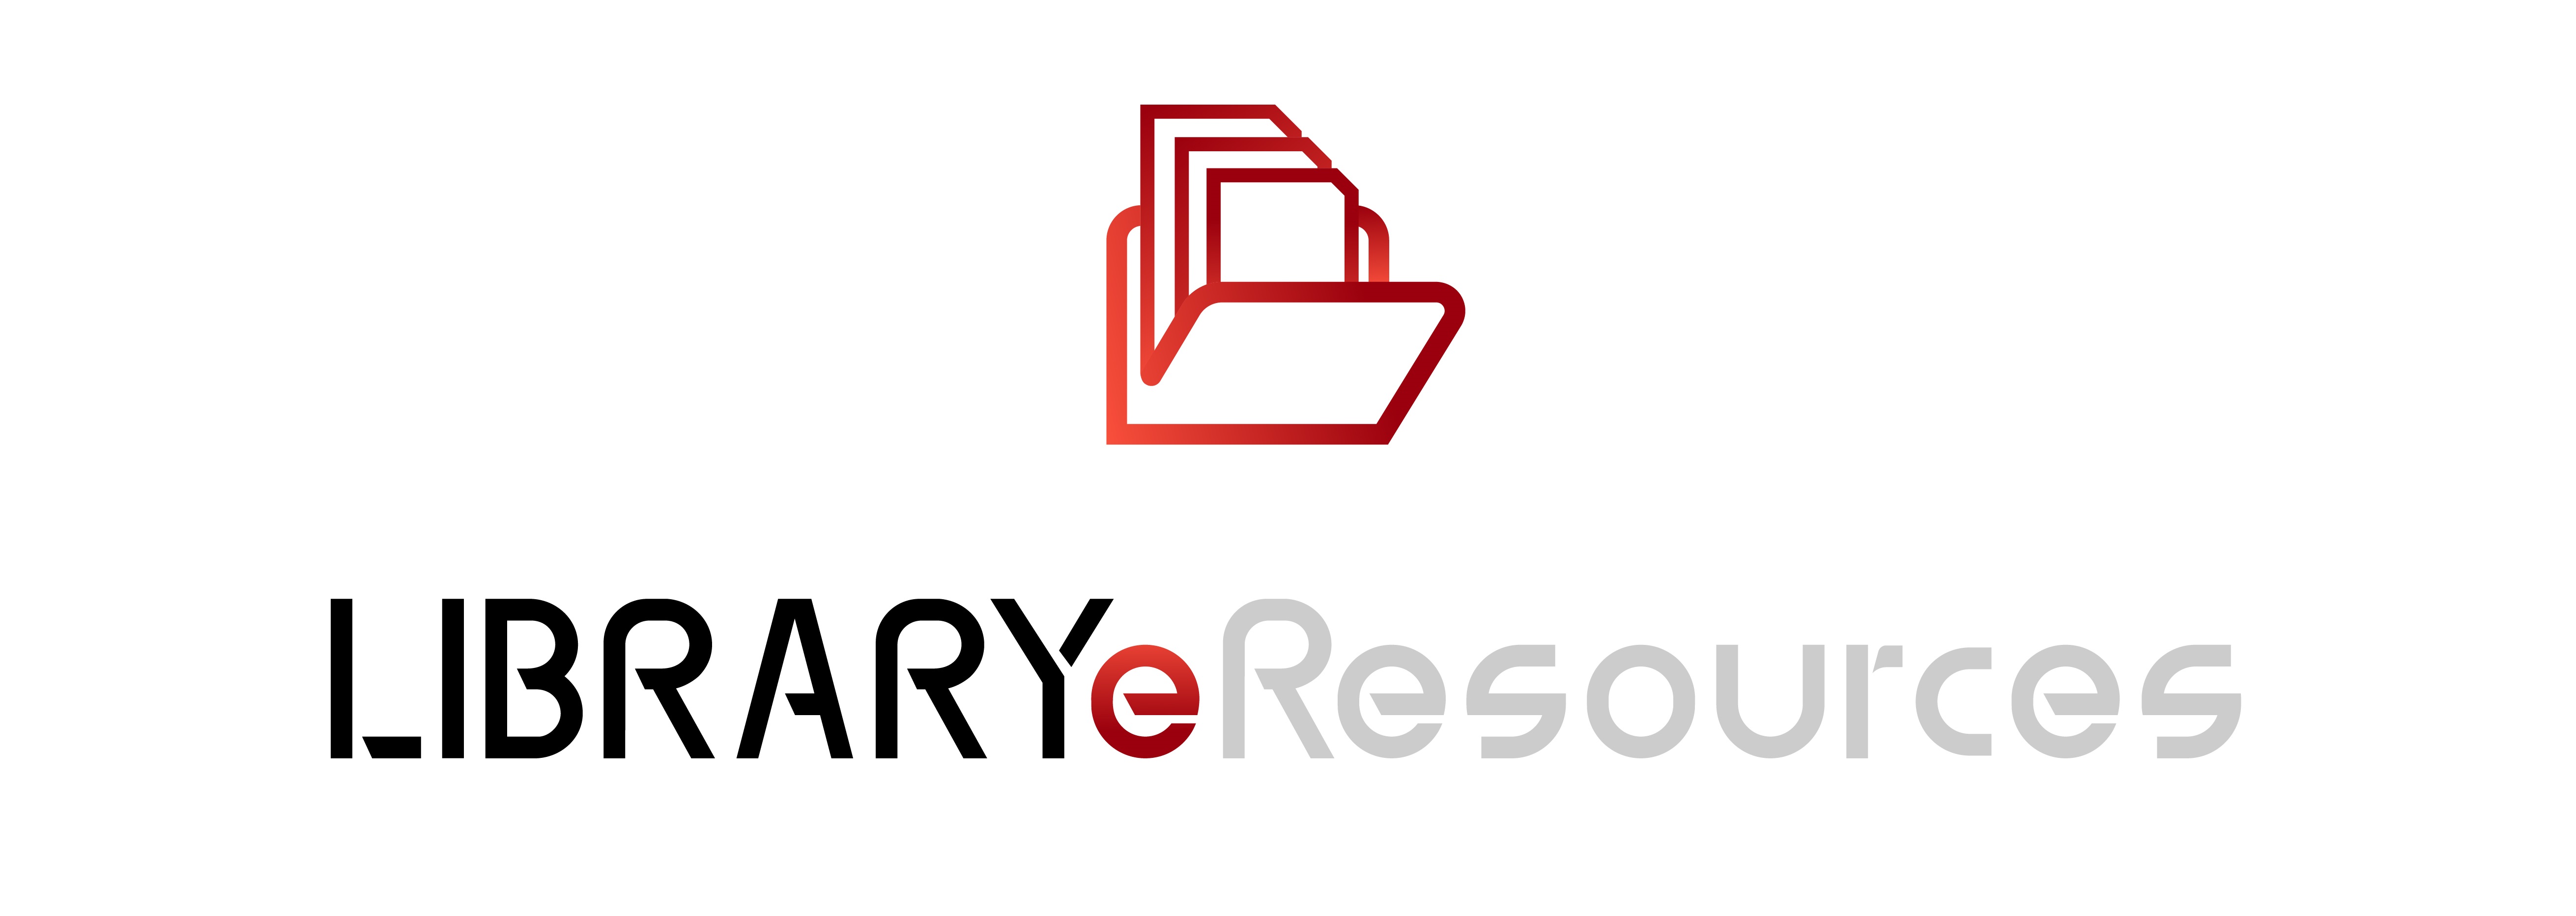 LibraryeResources - Gold Coast City Libraries